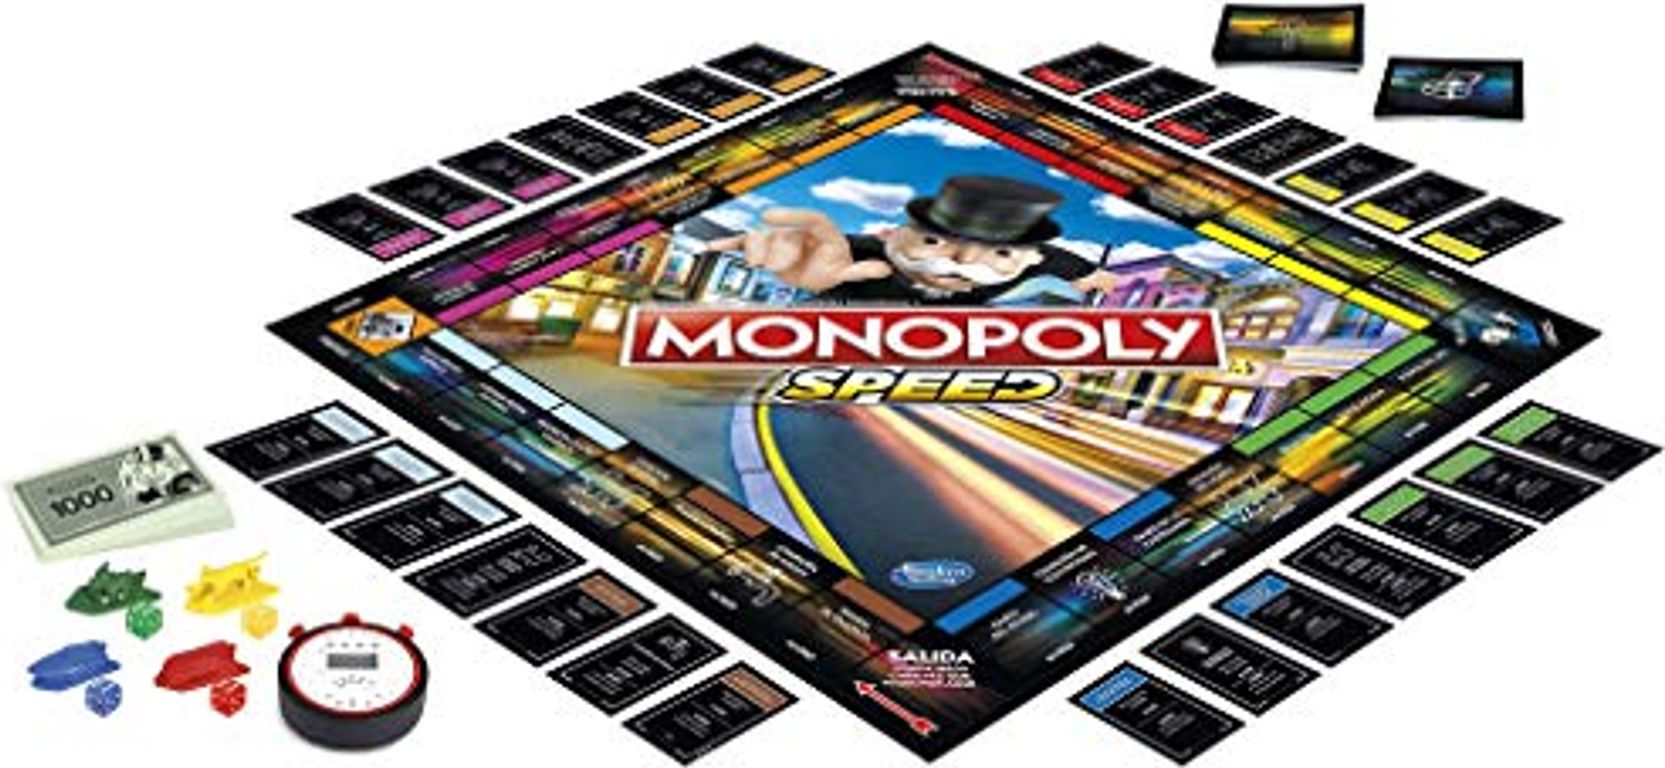 Monopoly Speed komponenten